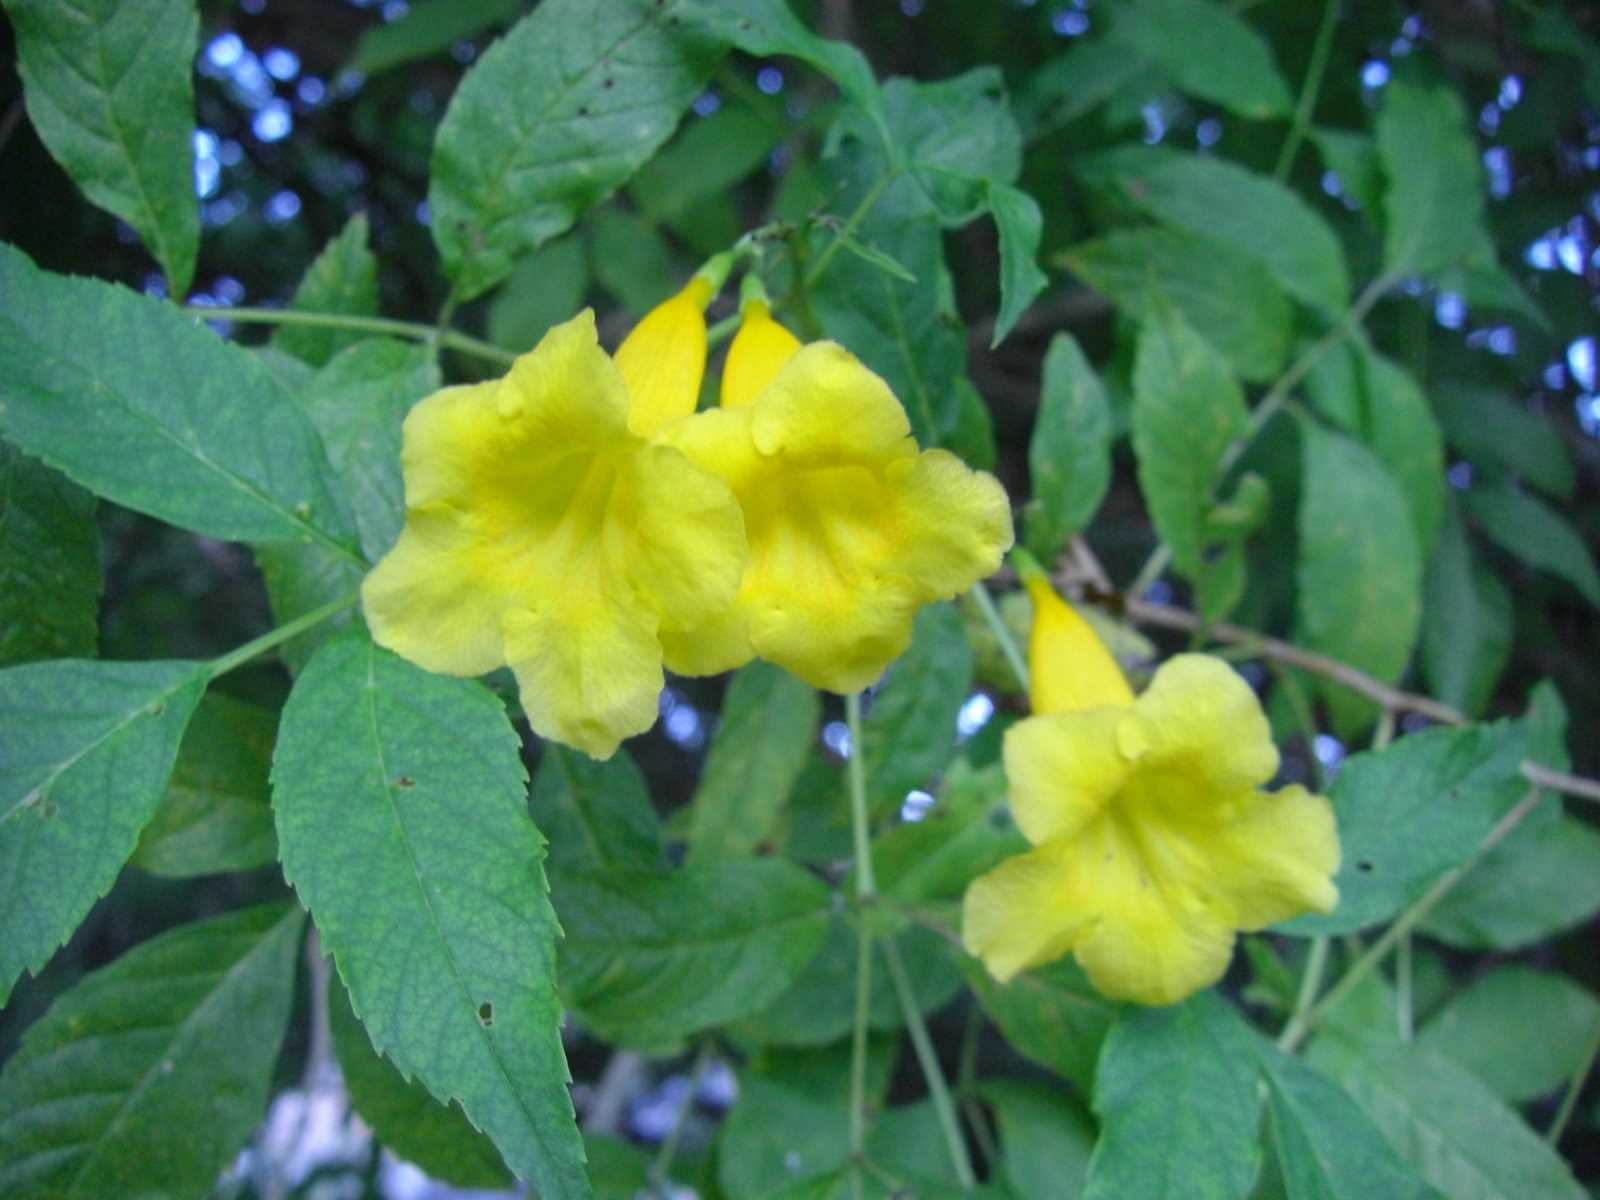 CIMG17
23 yellow flower
